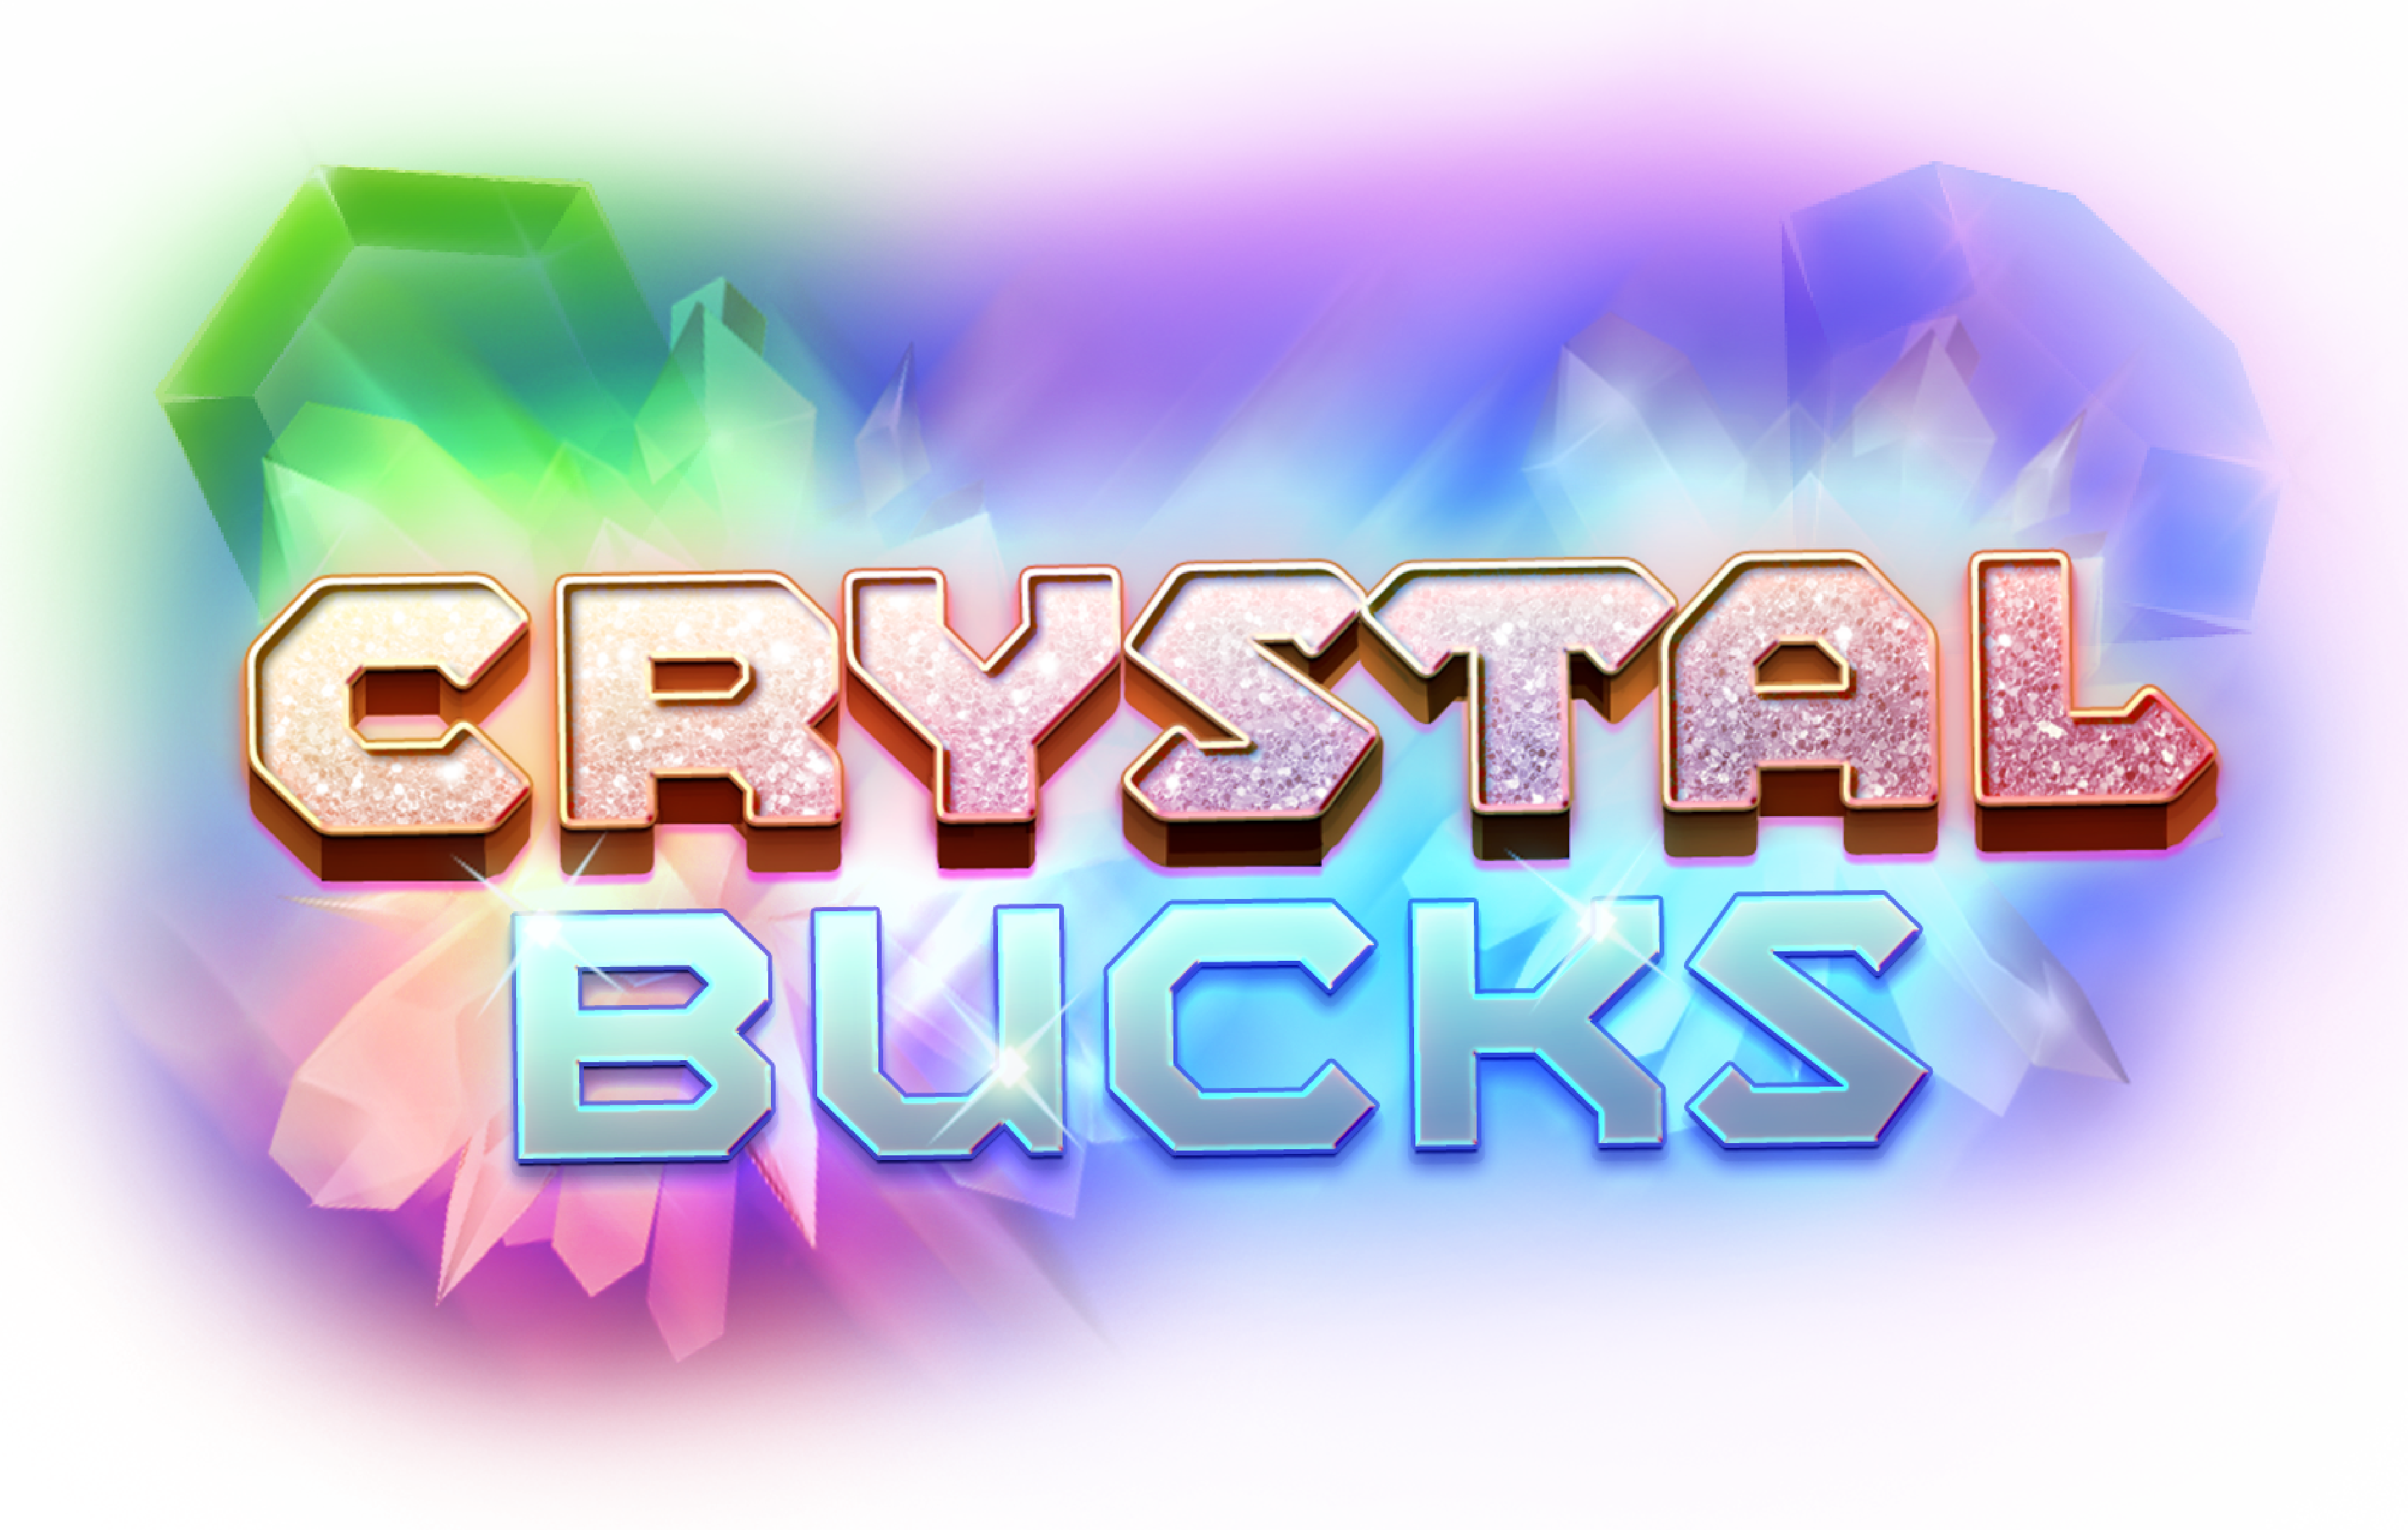 Crystal Bucks